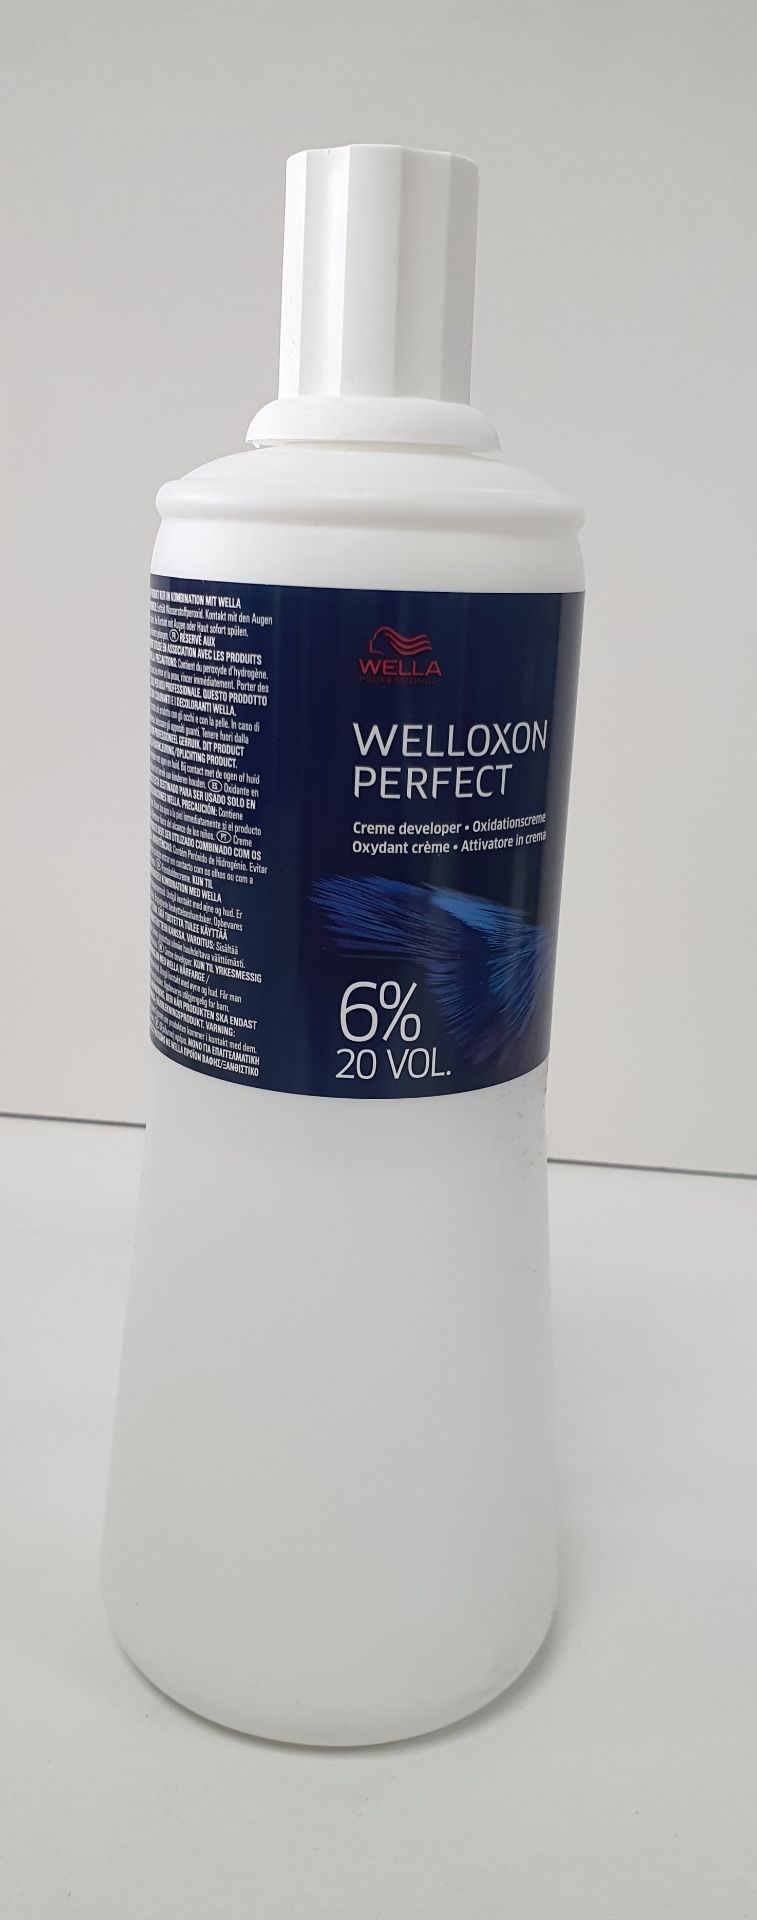 5 x Wella Welloxon Perfect Crème Developer | RRP £ 74.75 - Image 2 of 4